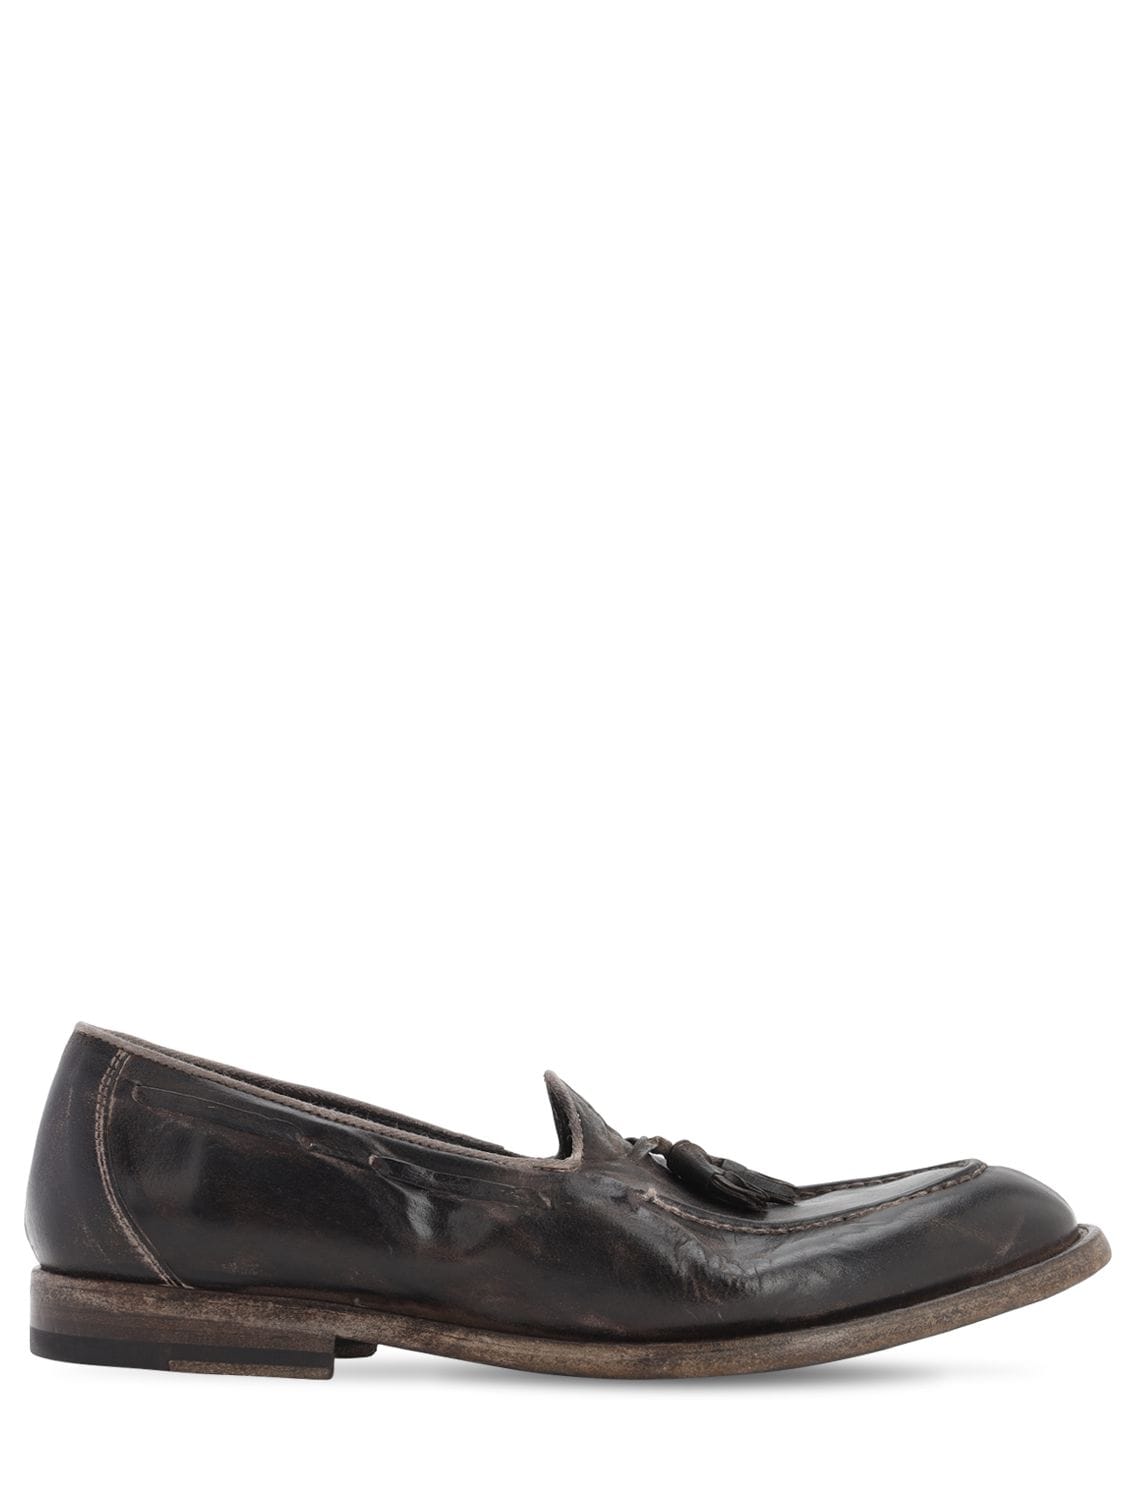 Shoto Leather Loafers W/ Tassels In Dark Brown